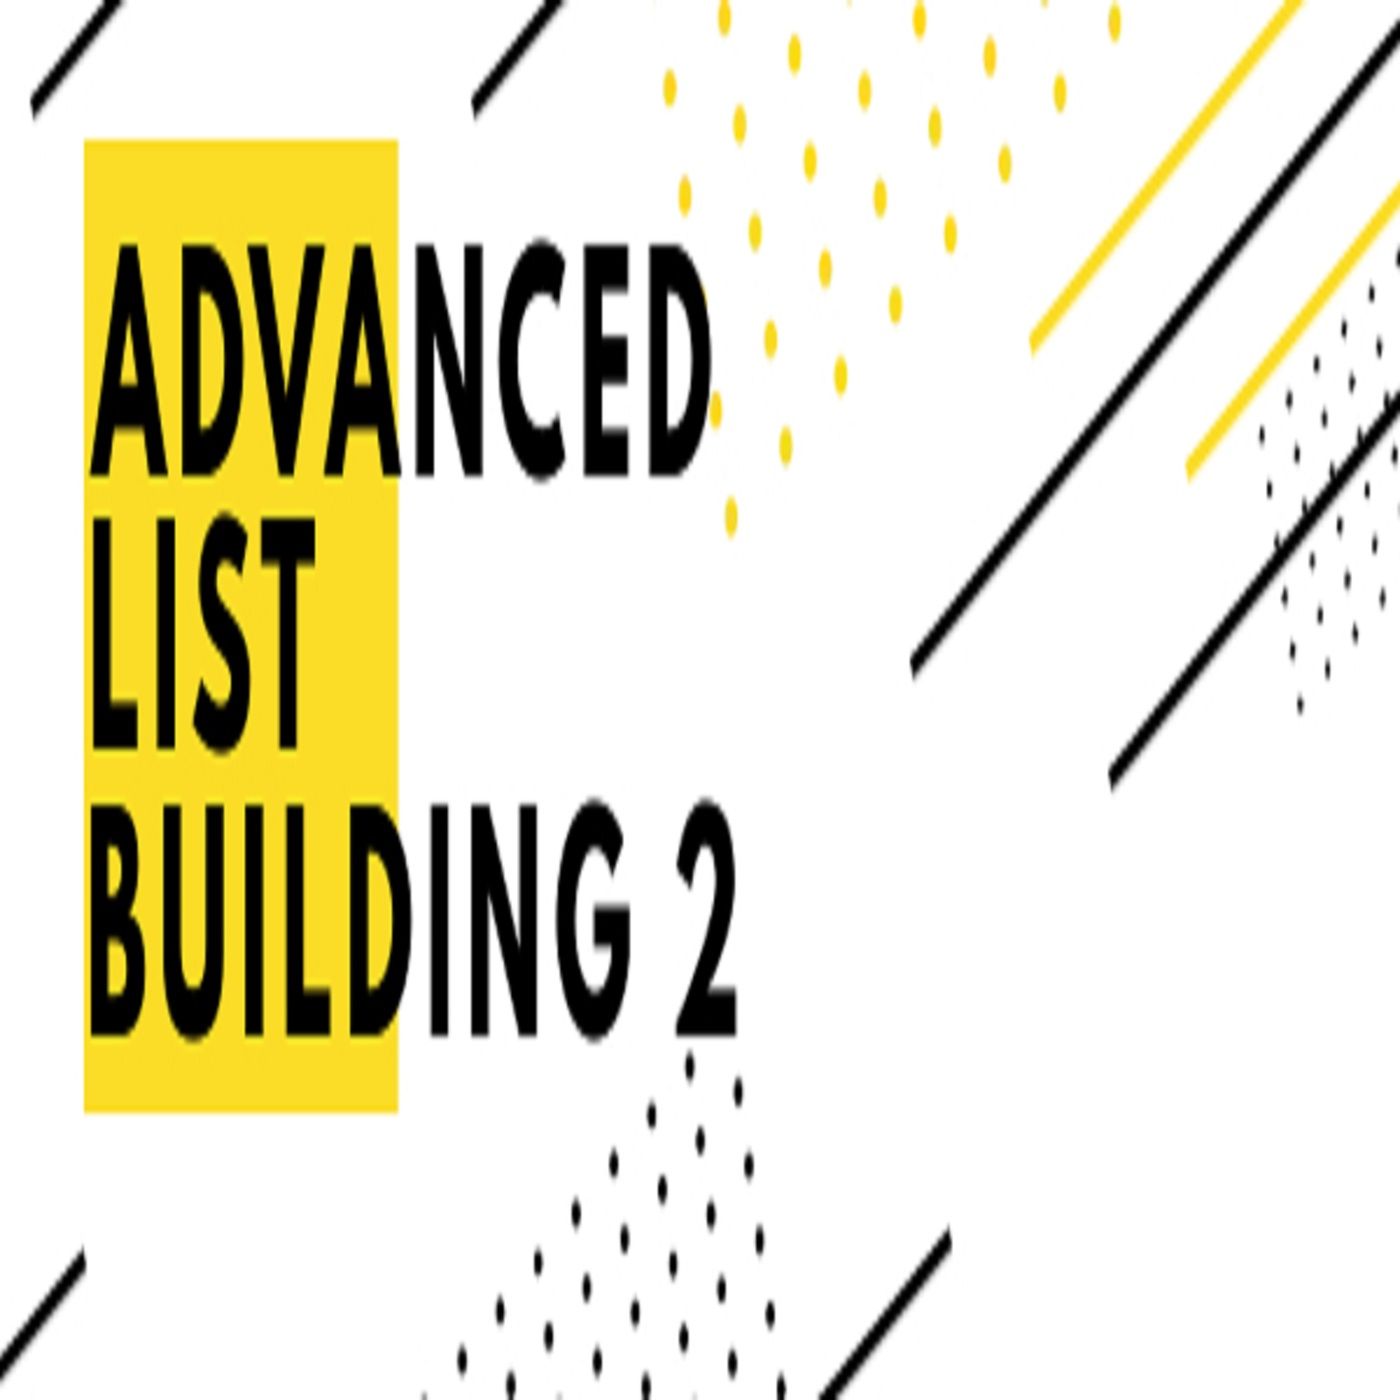 ADVANCED LIST BUILDING 2